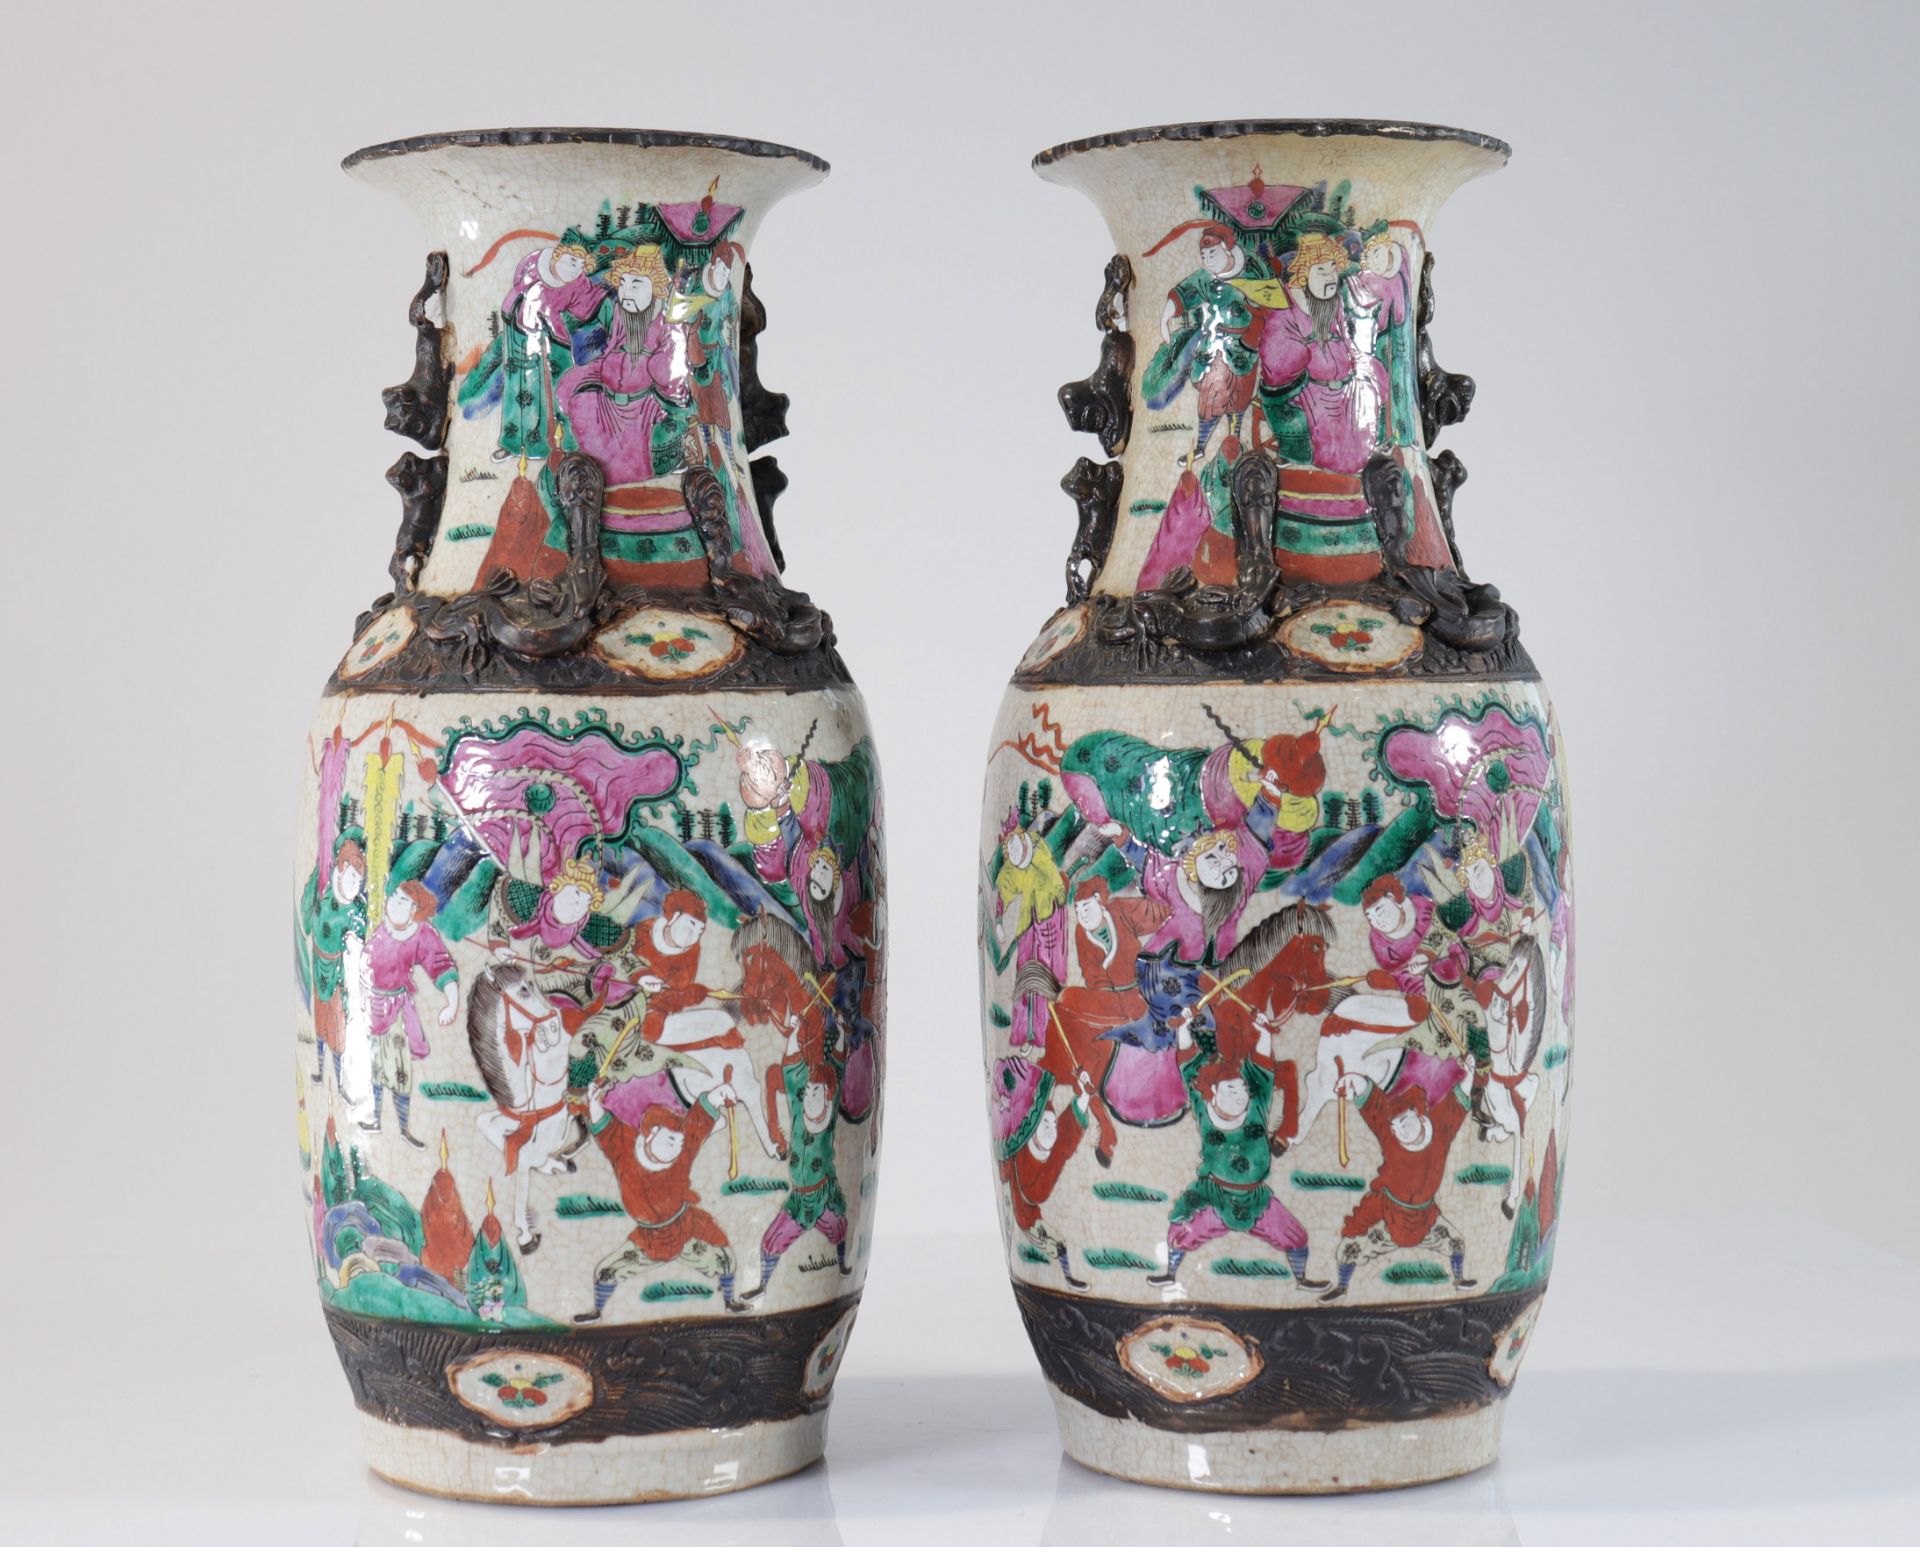 Asia - pair of Nanjing vases - 19th